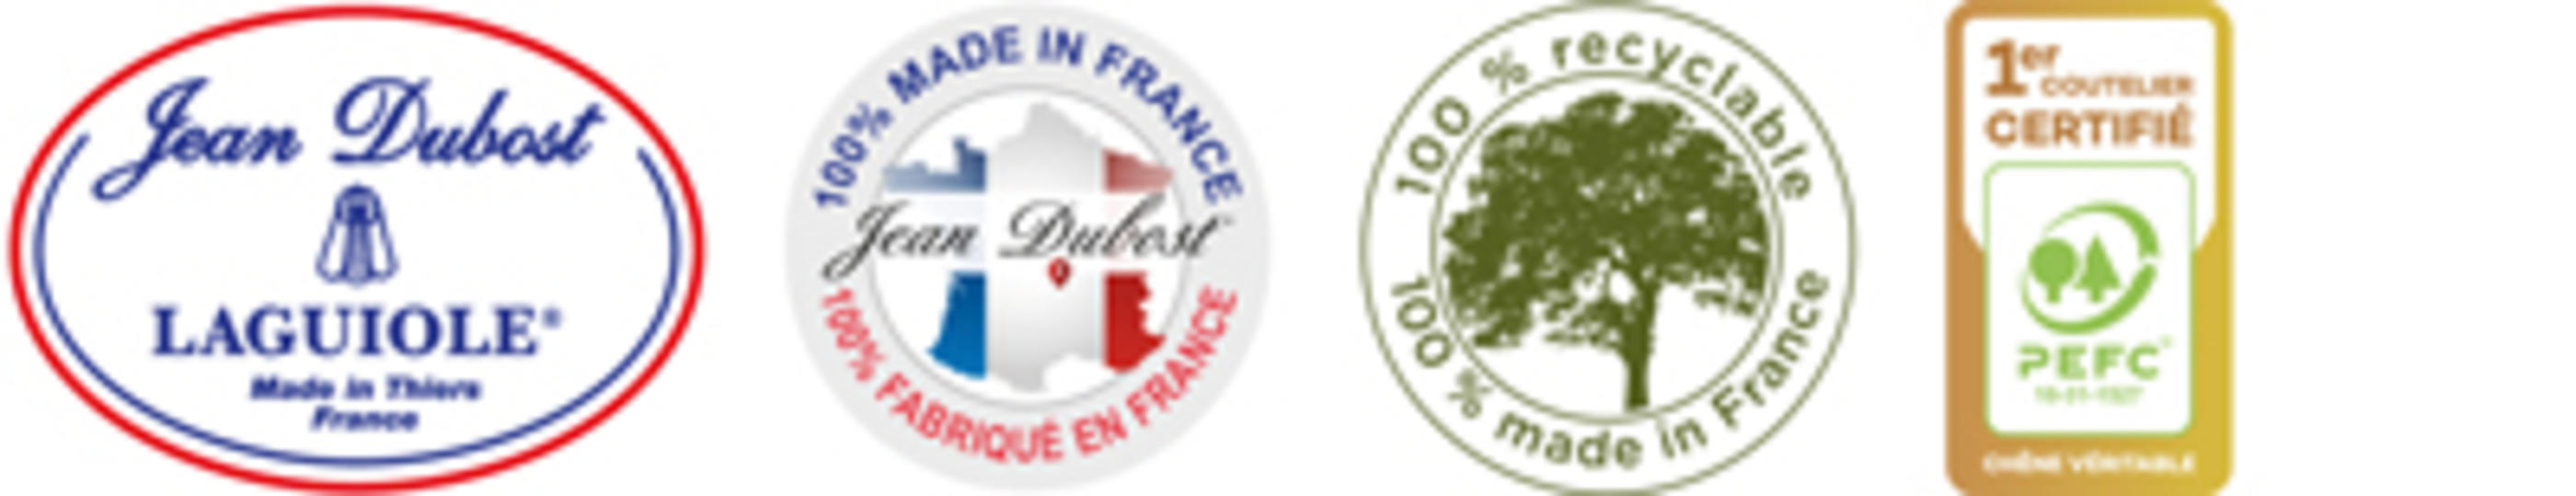 logo Jean Dubost JDL-CF-AER-PEFC-400x77px